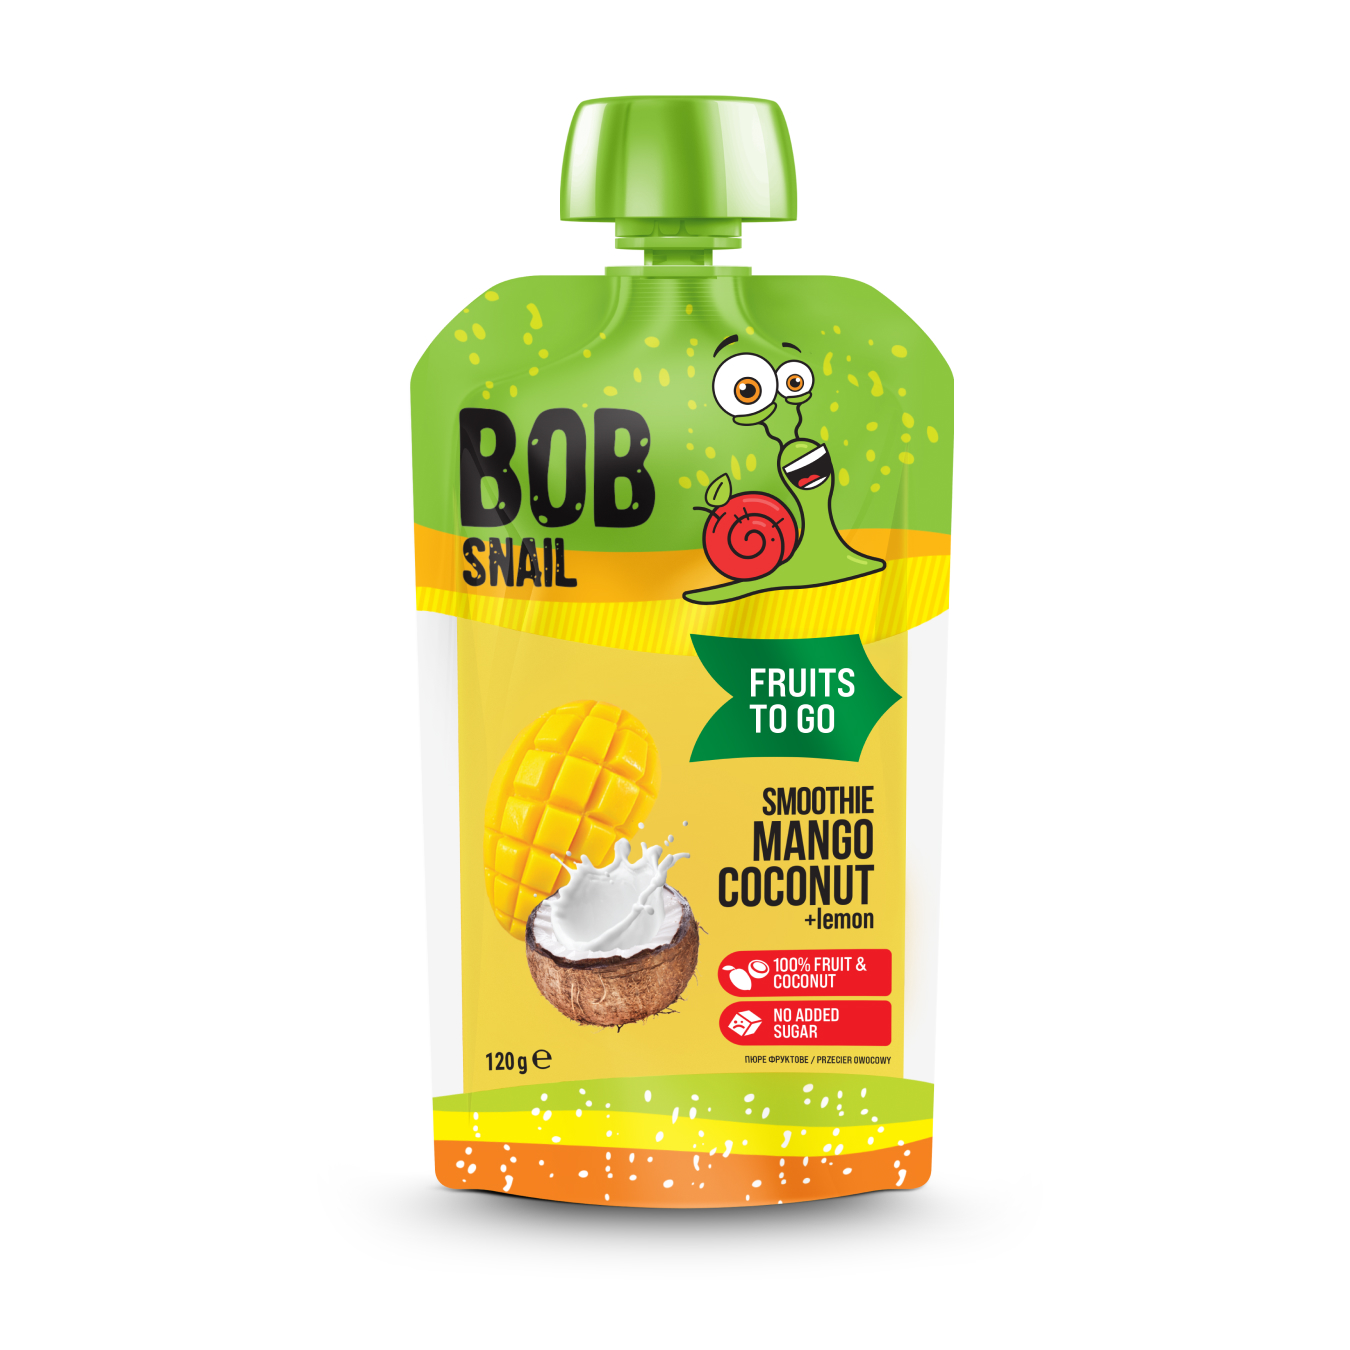 Bob Snail fruit puree Mango-Coconut Smoothies pasteurized 120 g